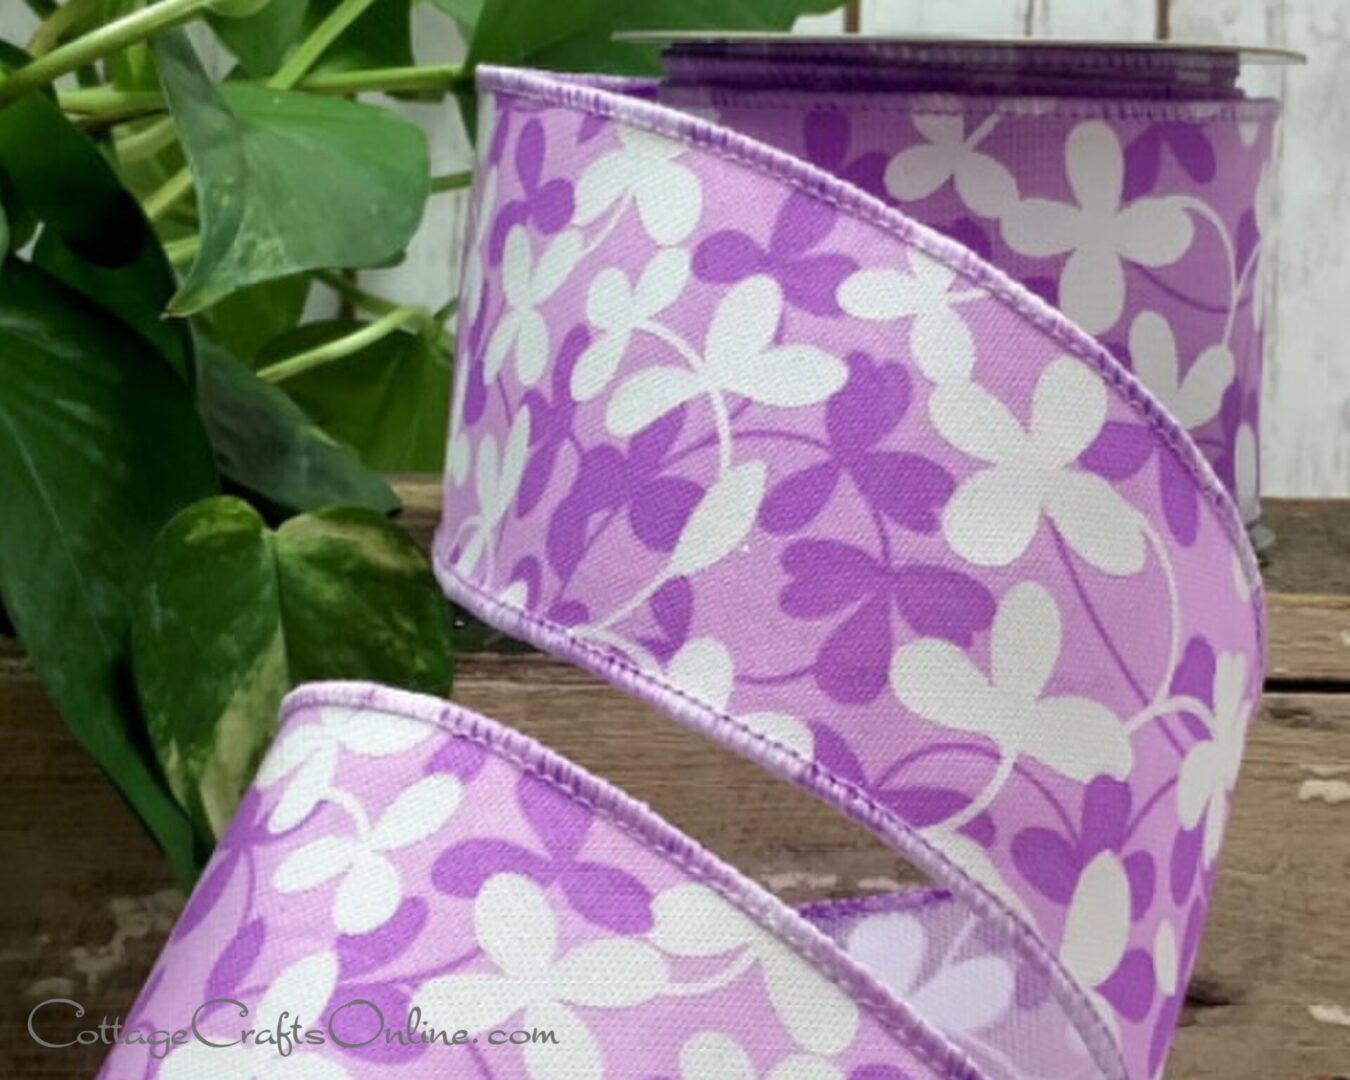 ds purple lavender floral springtime flowers 2.19.24 7.80 before discount of 35 09 3884-002